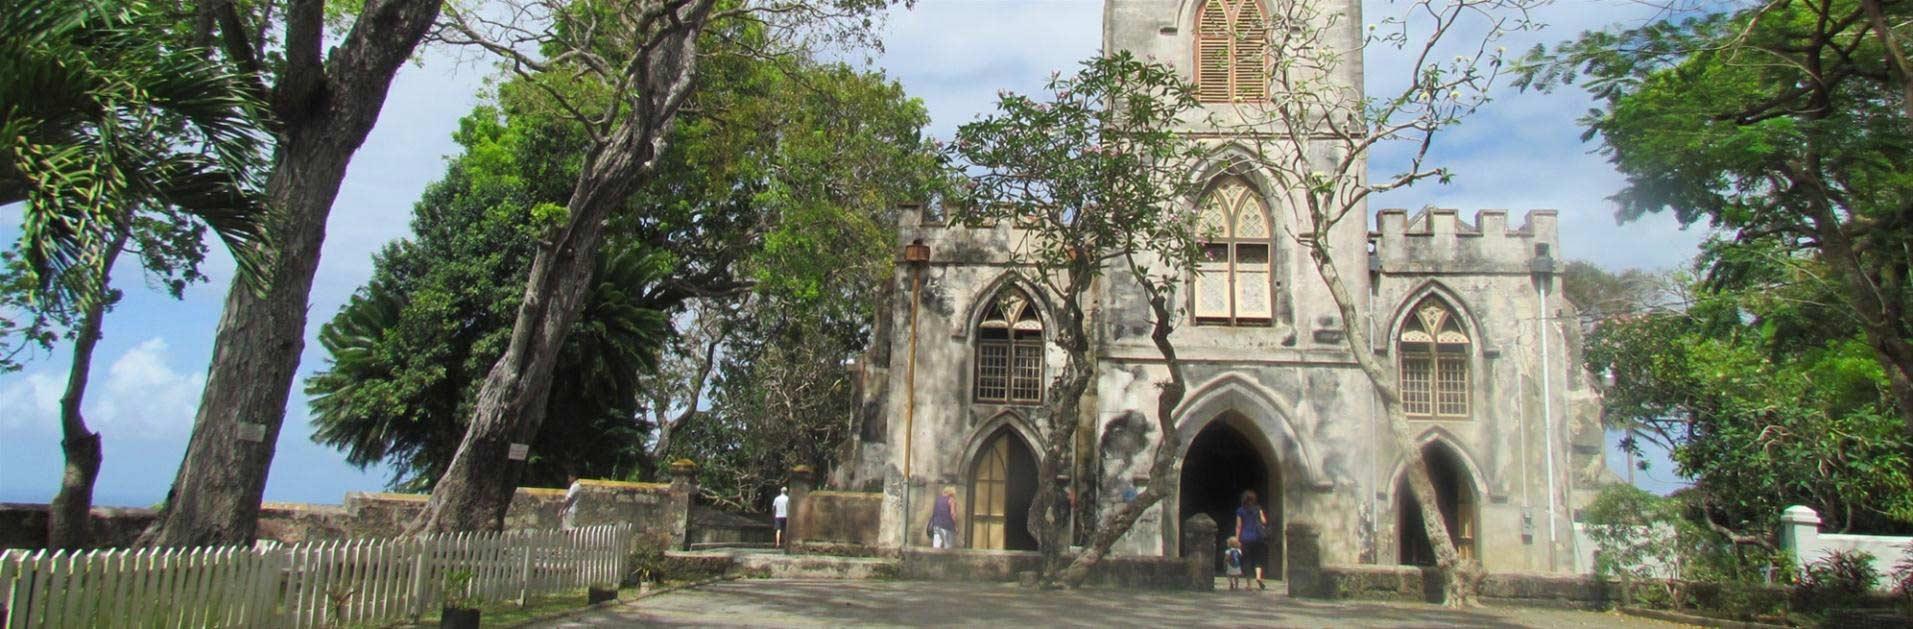 St John S Parish Church Barbados Gothic Inspired Church